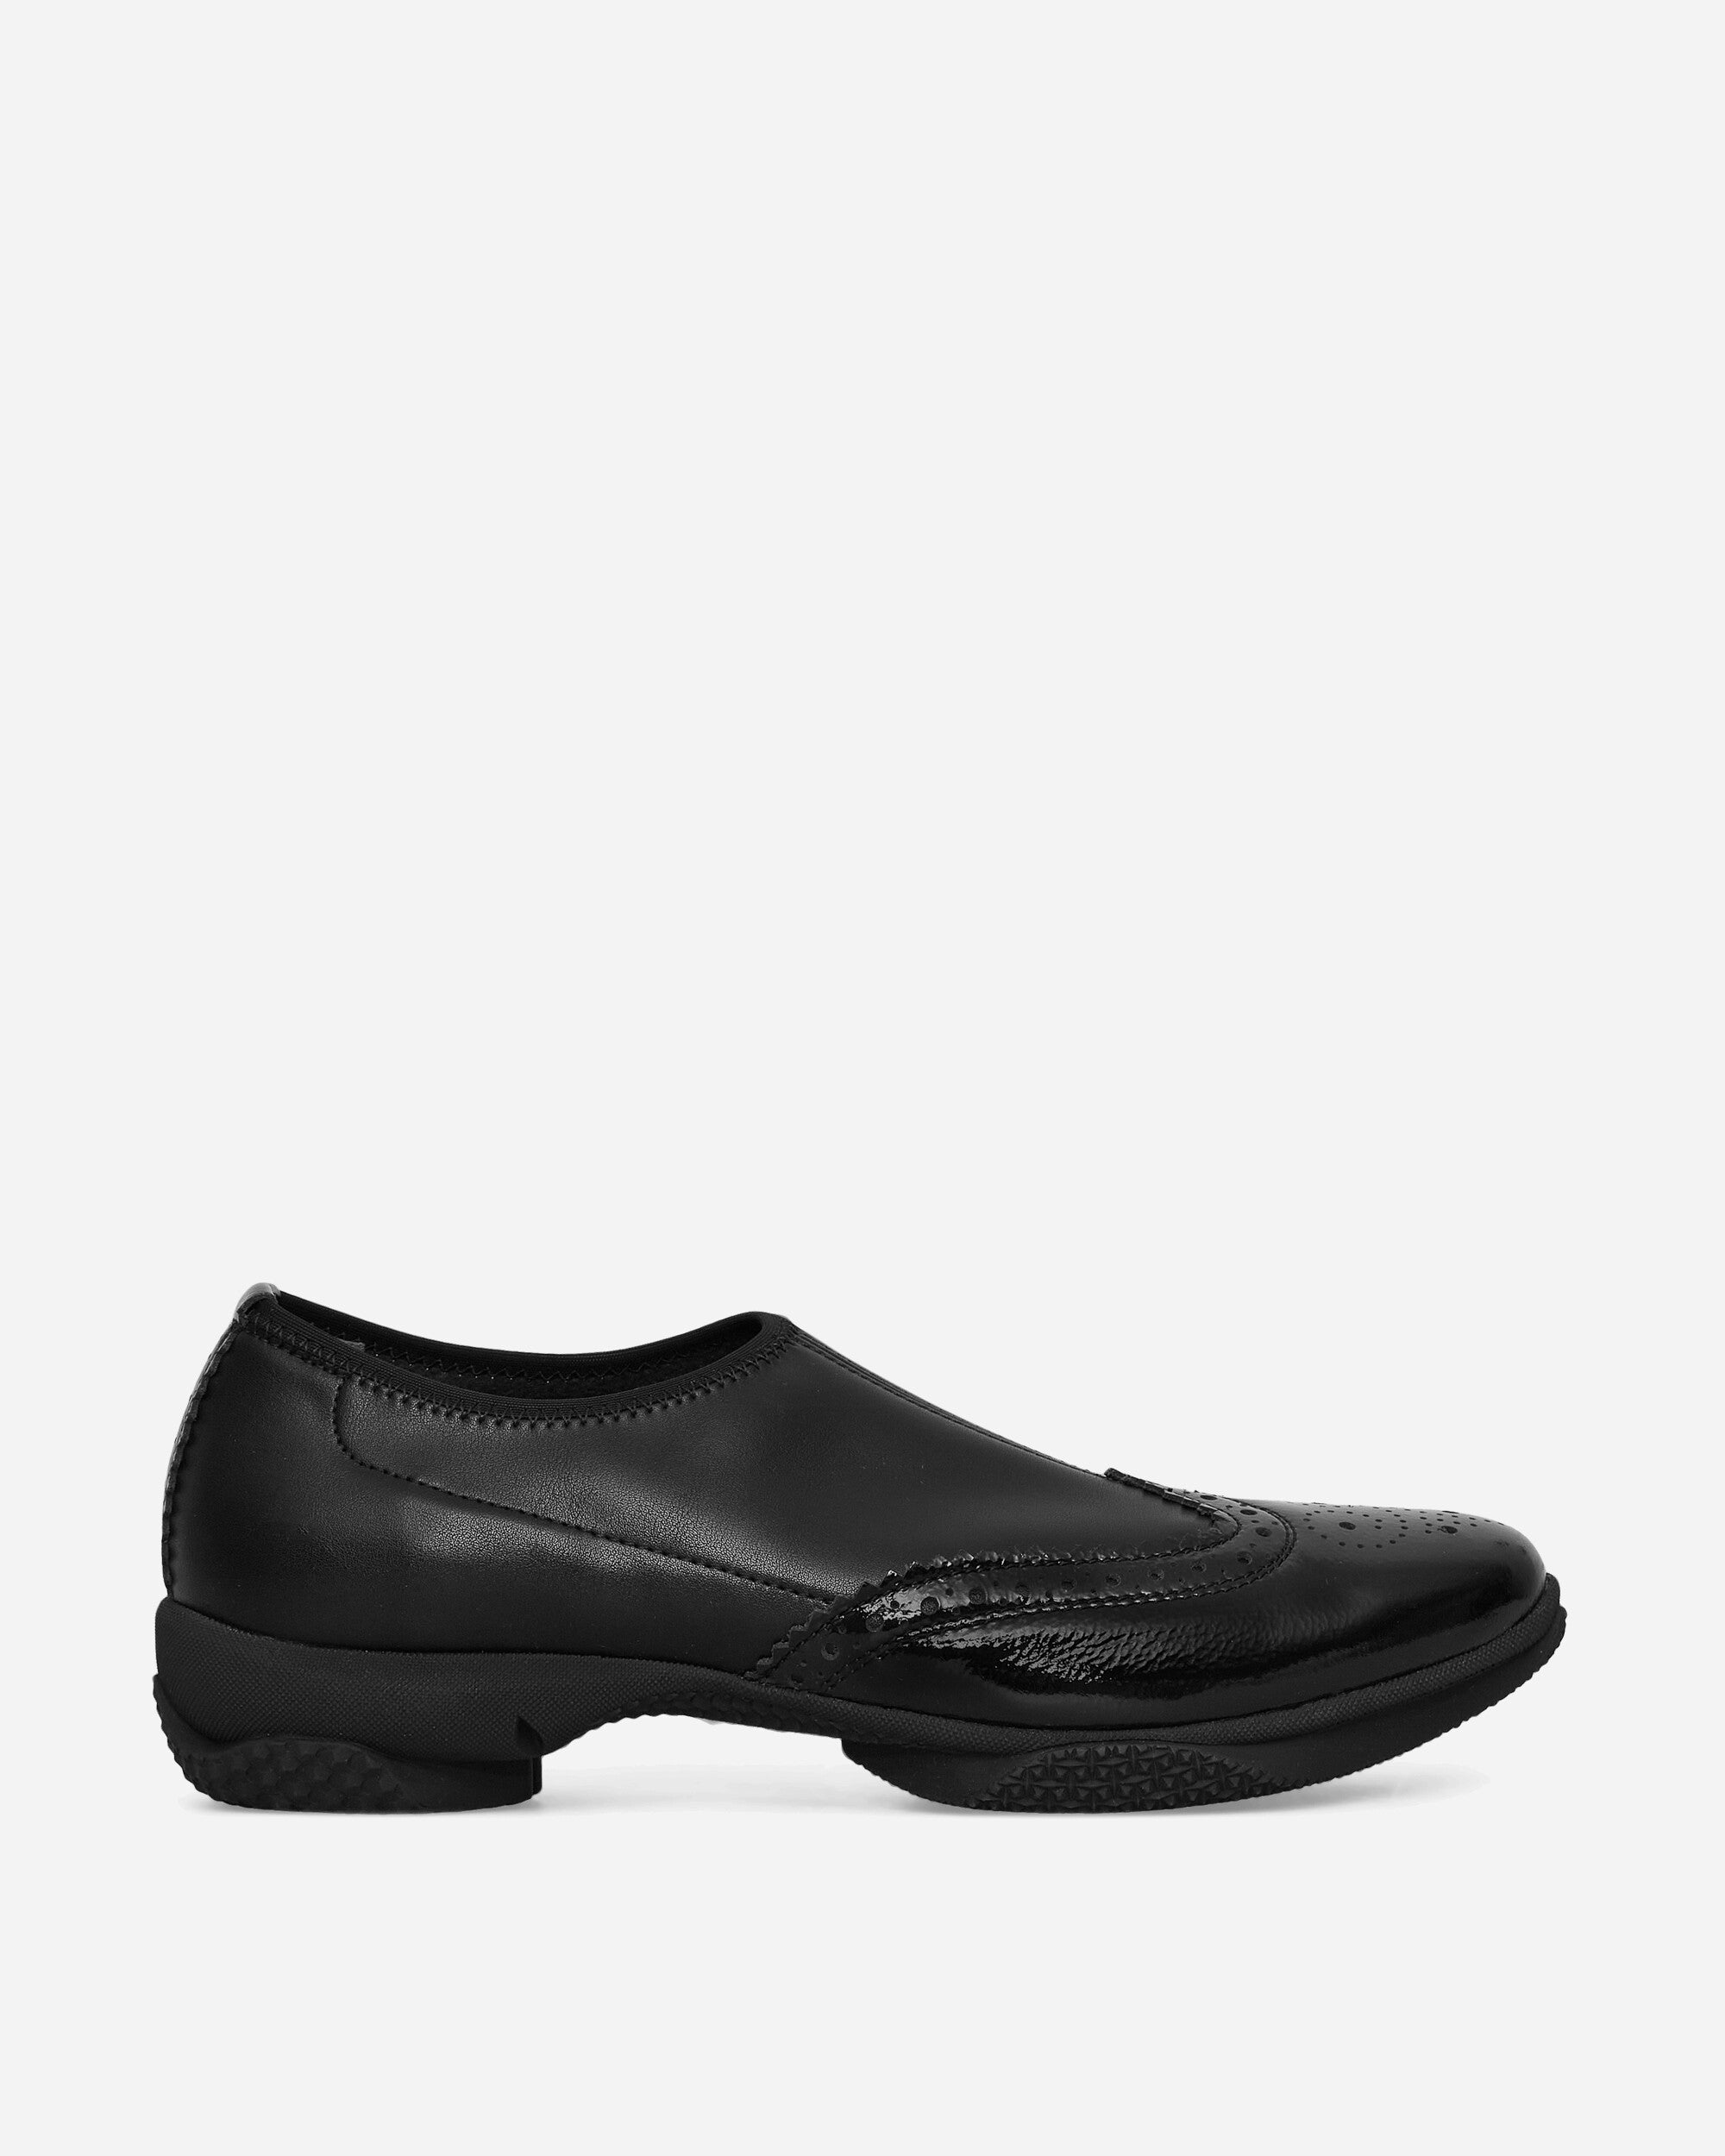 Kiko Kostadinov Wmns Sonia Slip On Brogue Onyx Black Classic Shoes Loafers KKWSS24SN02-160 001